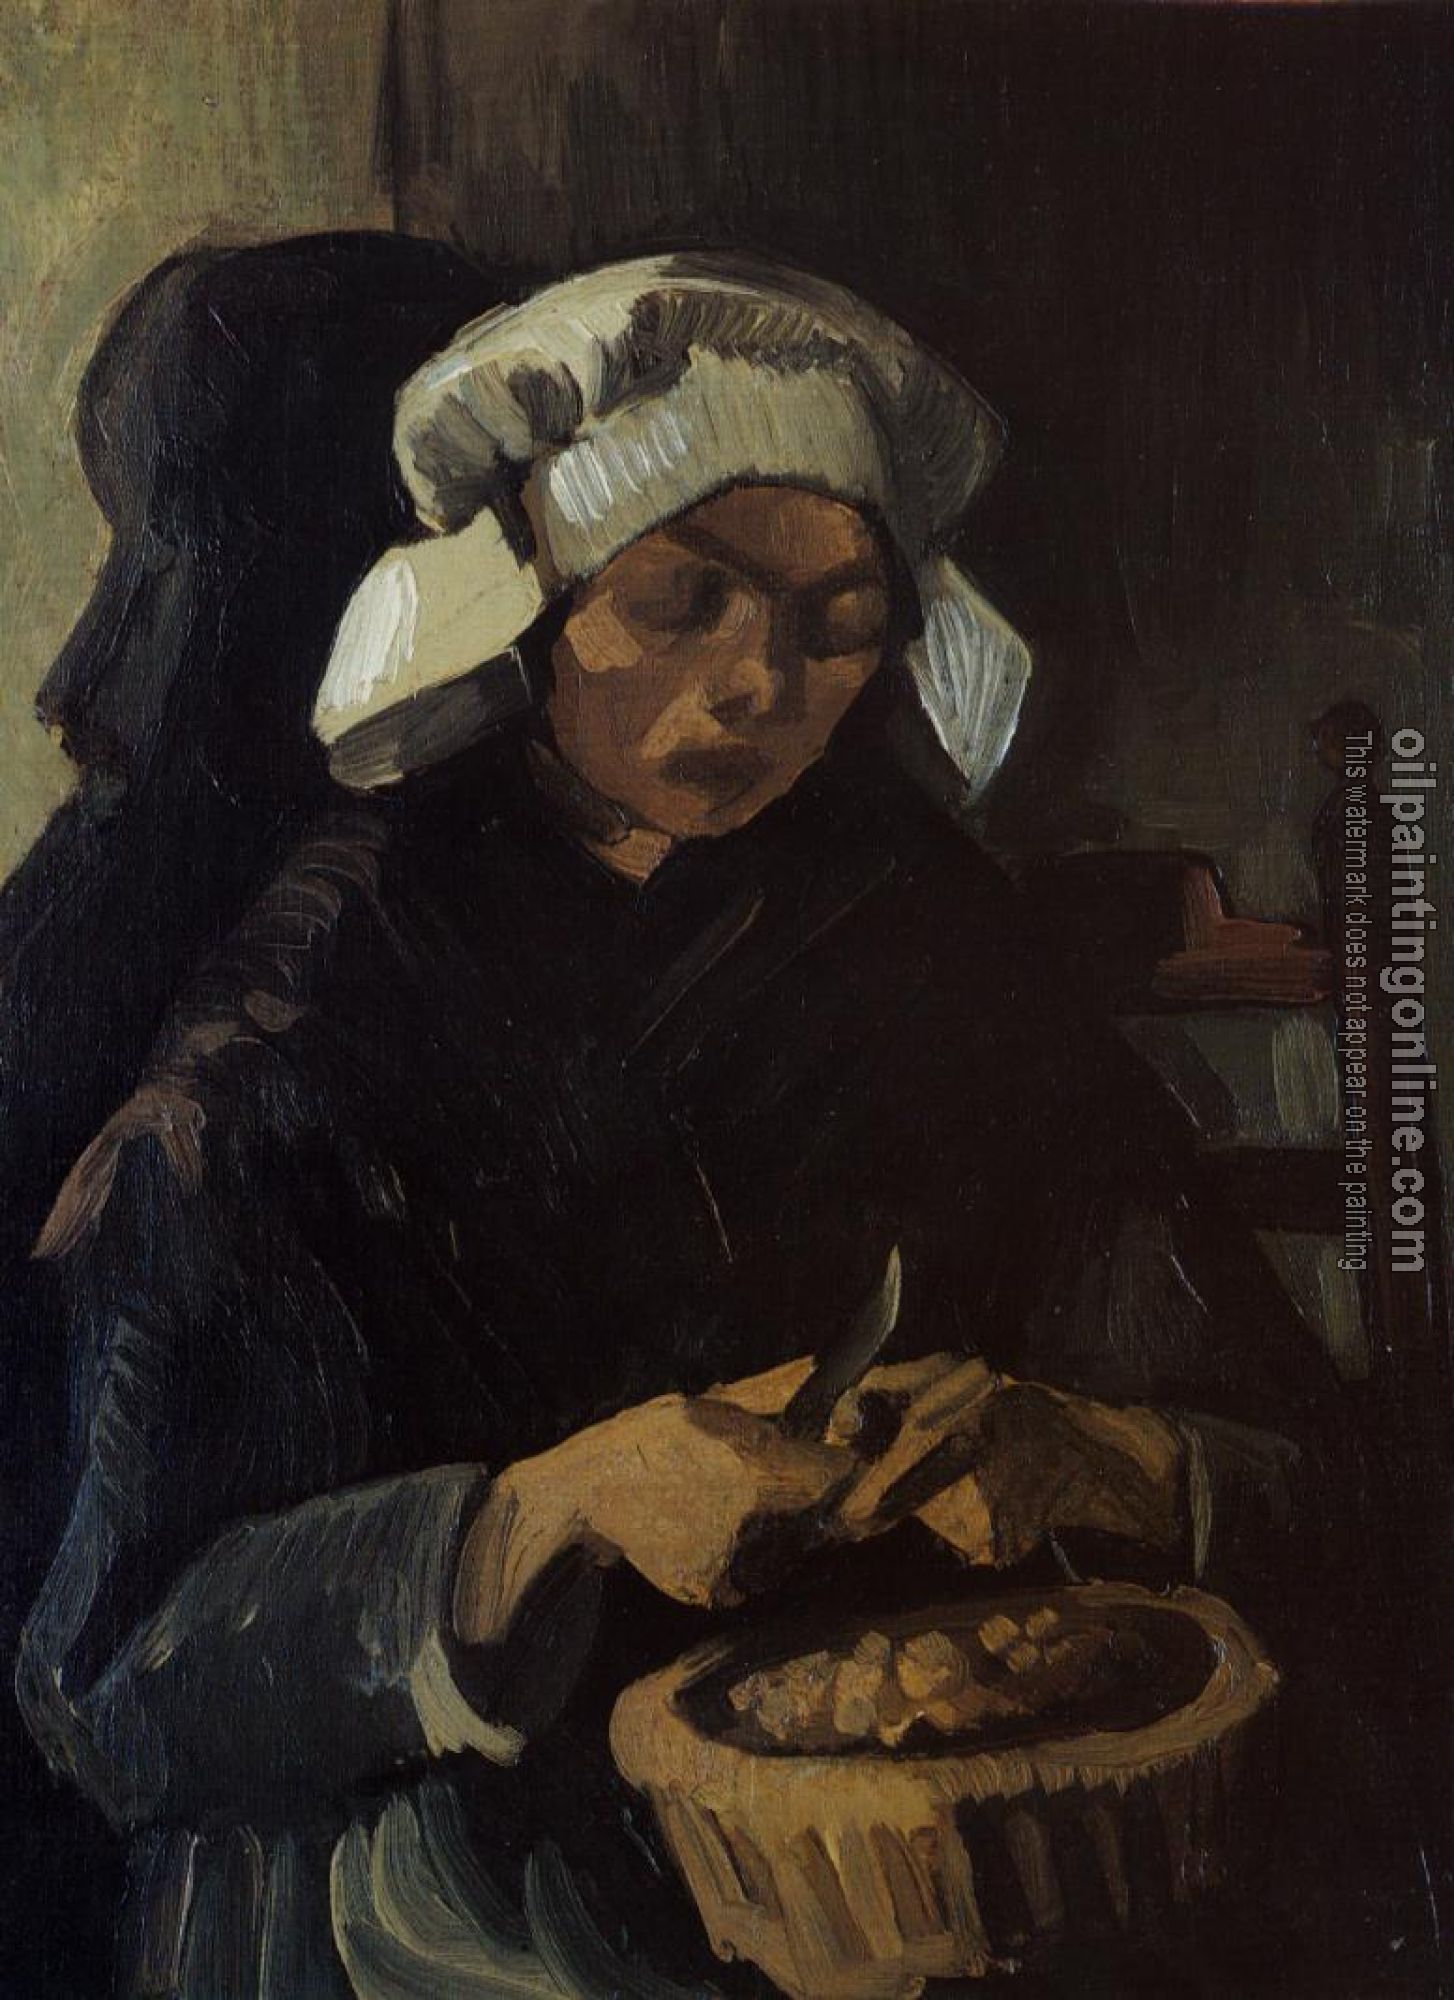 Gogh, Vincent van - Peasant Woman Peeling Potatoes, Neunen